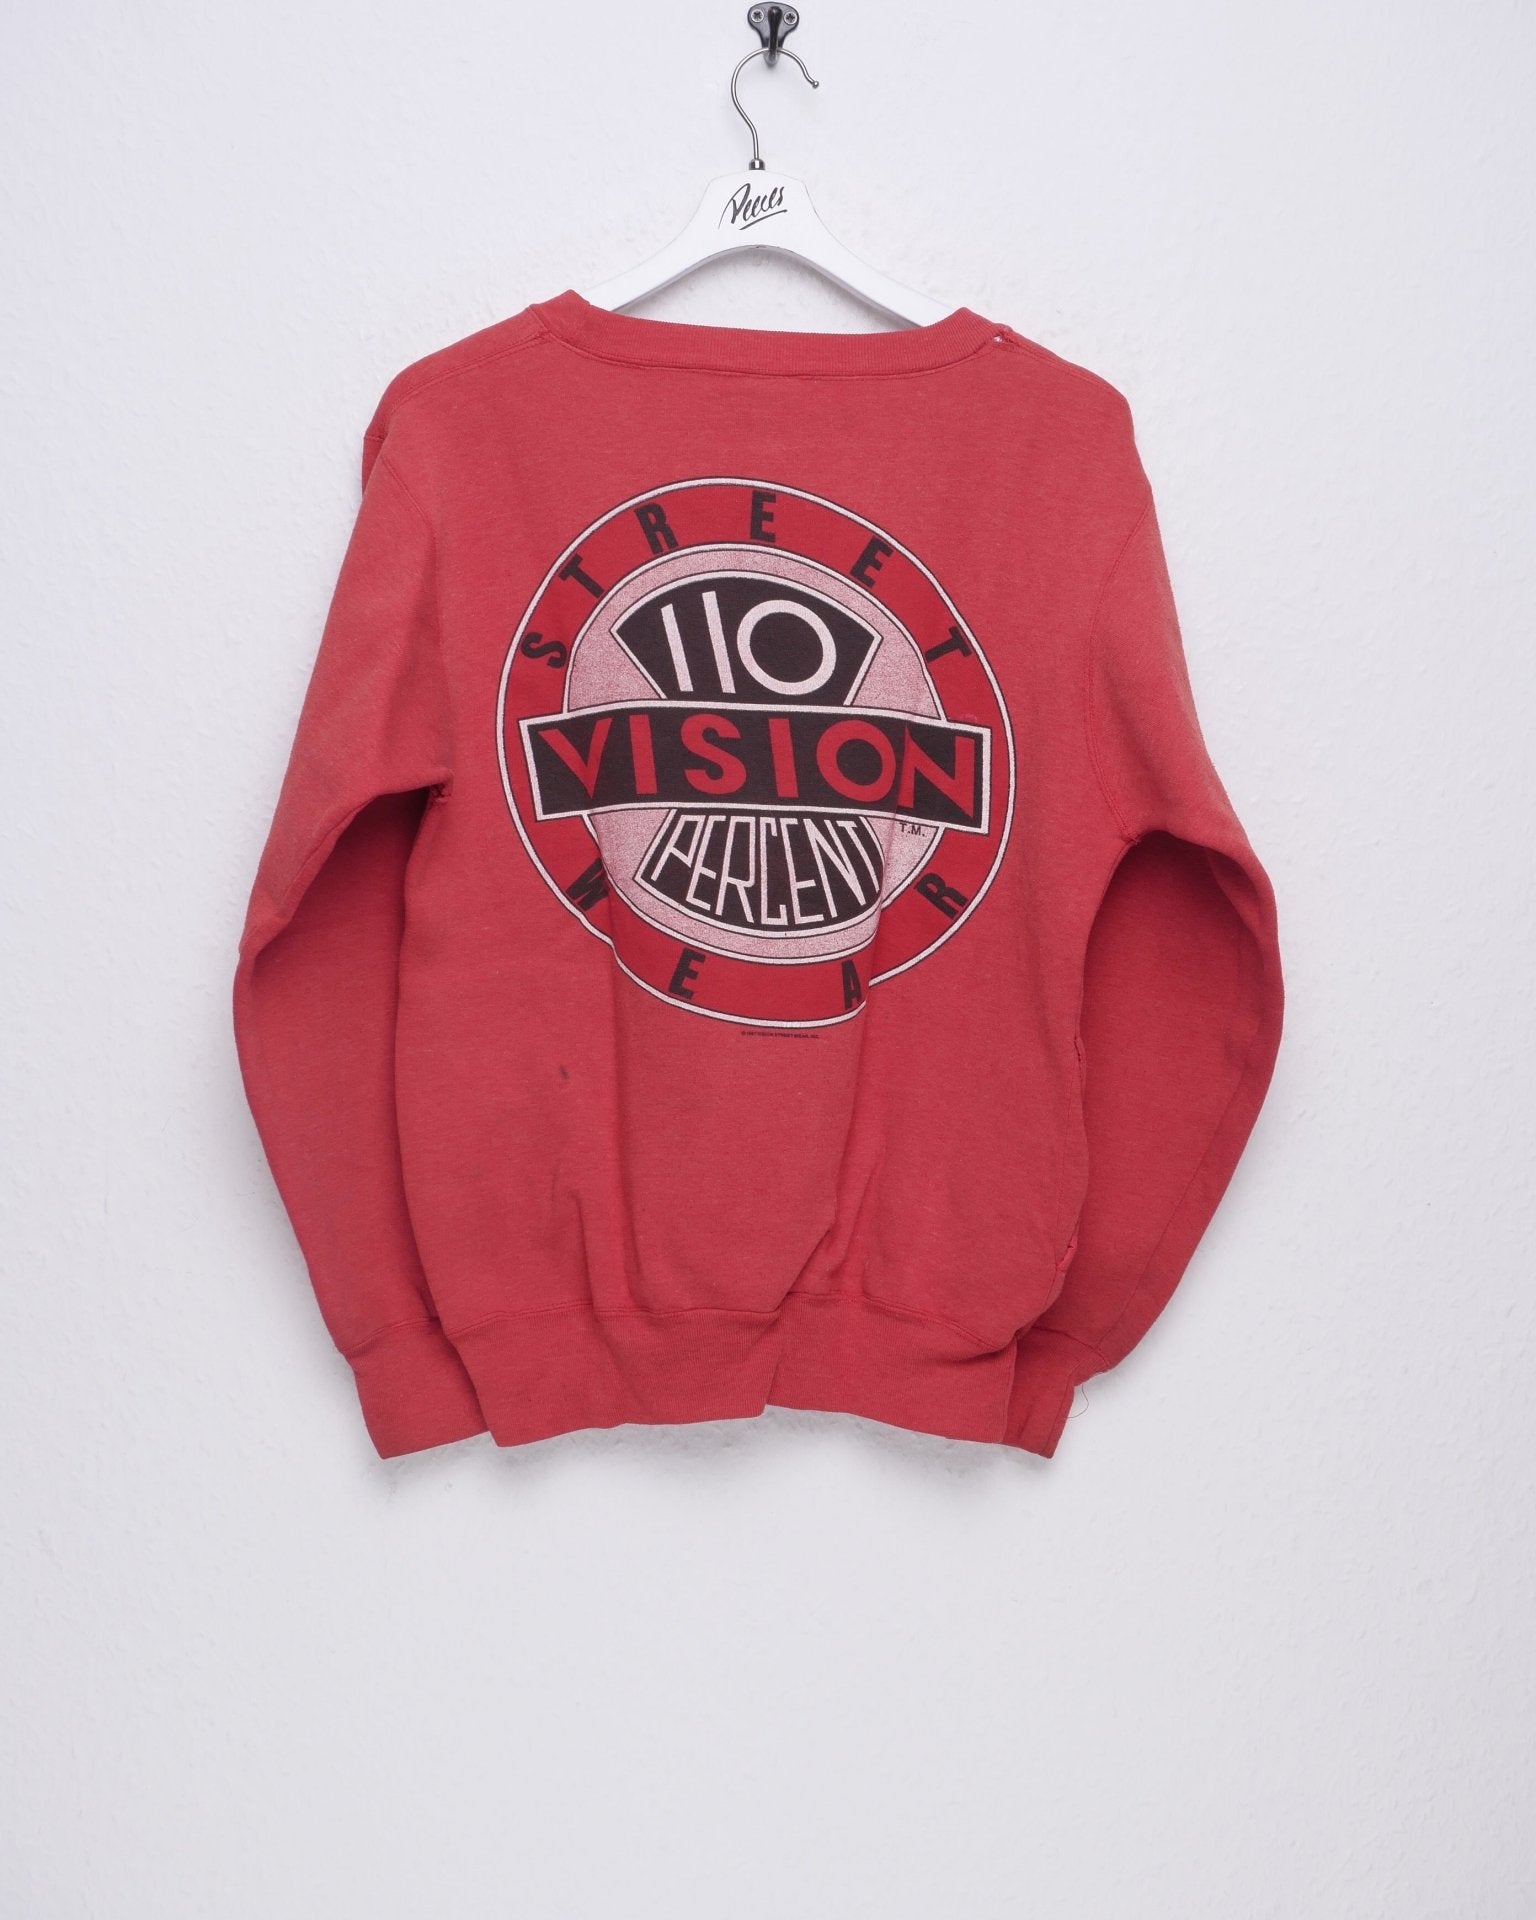 Vision 110 Percent Street Wear printed Logo 1987 Vintage Sweater - Peeces